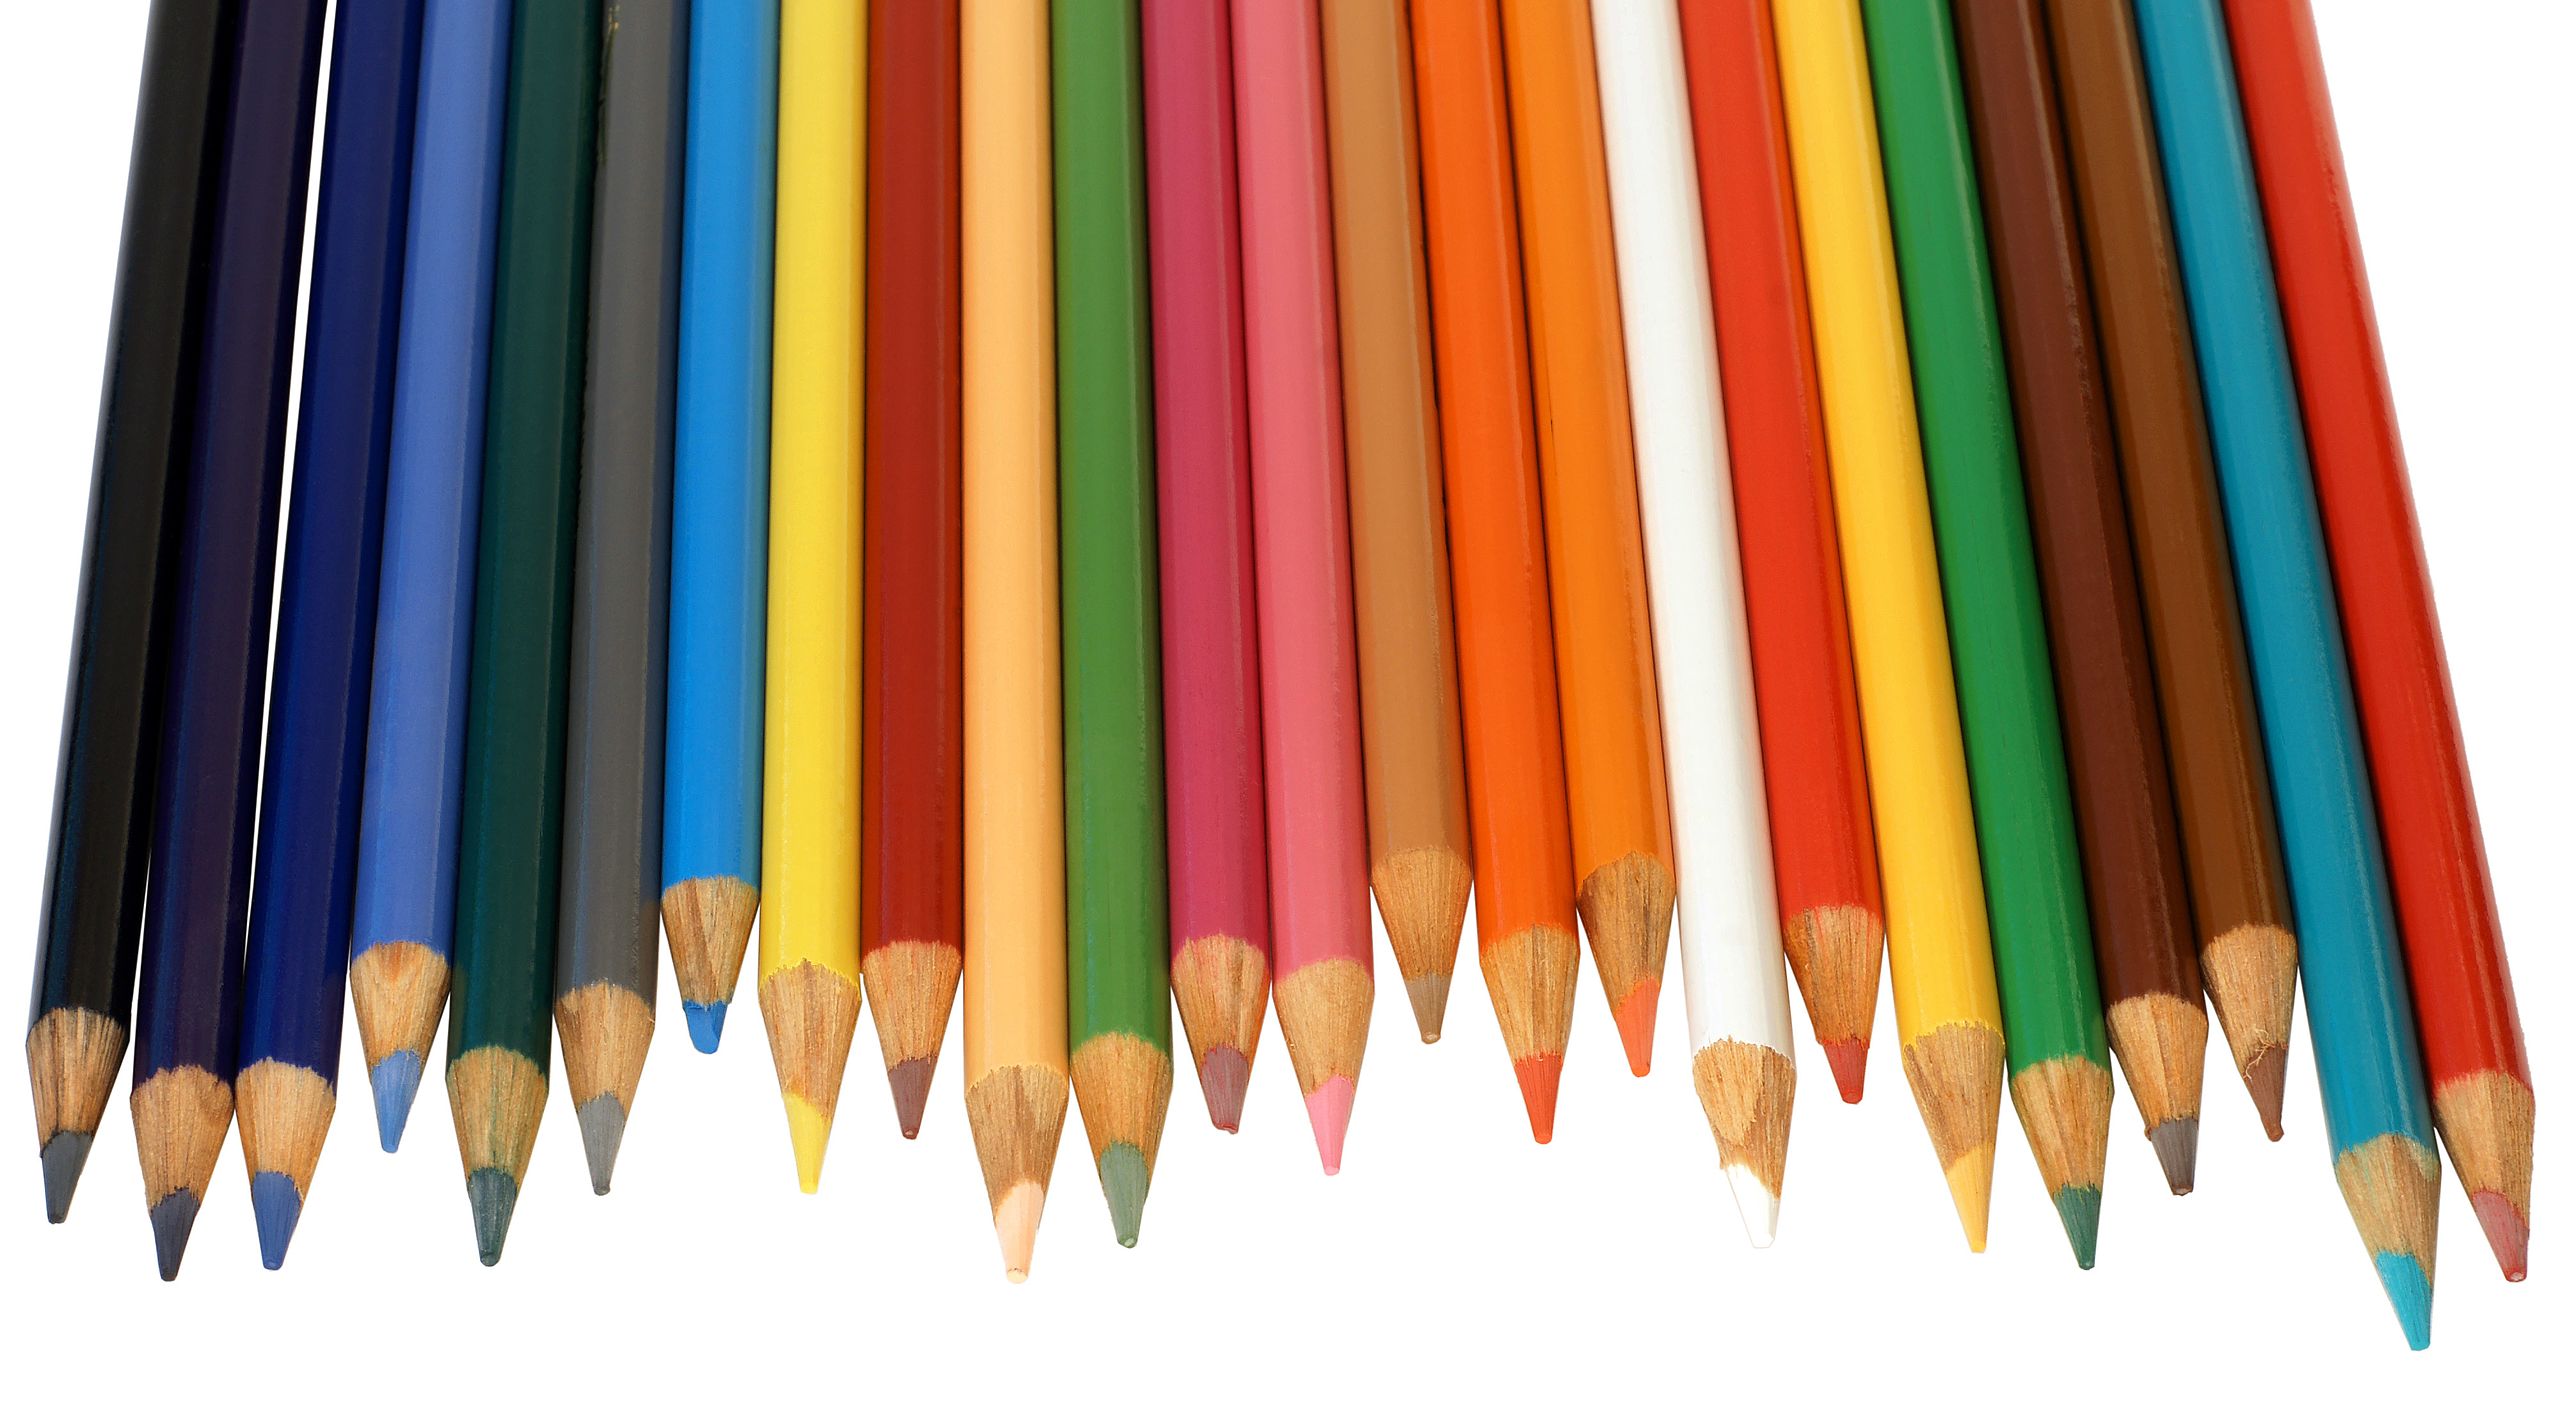 File:Colored-Pencils.jpg - Wikimedia Commons